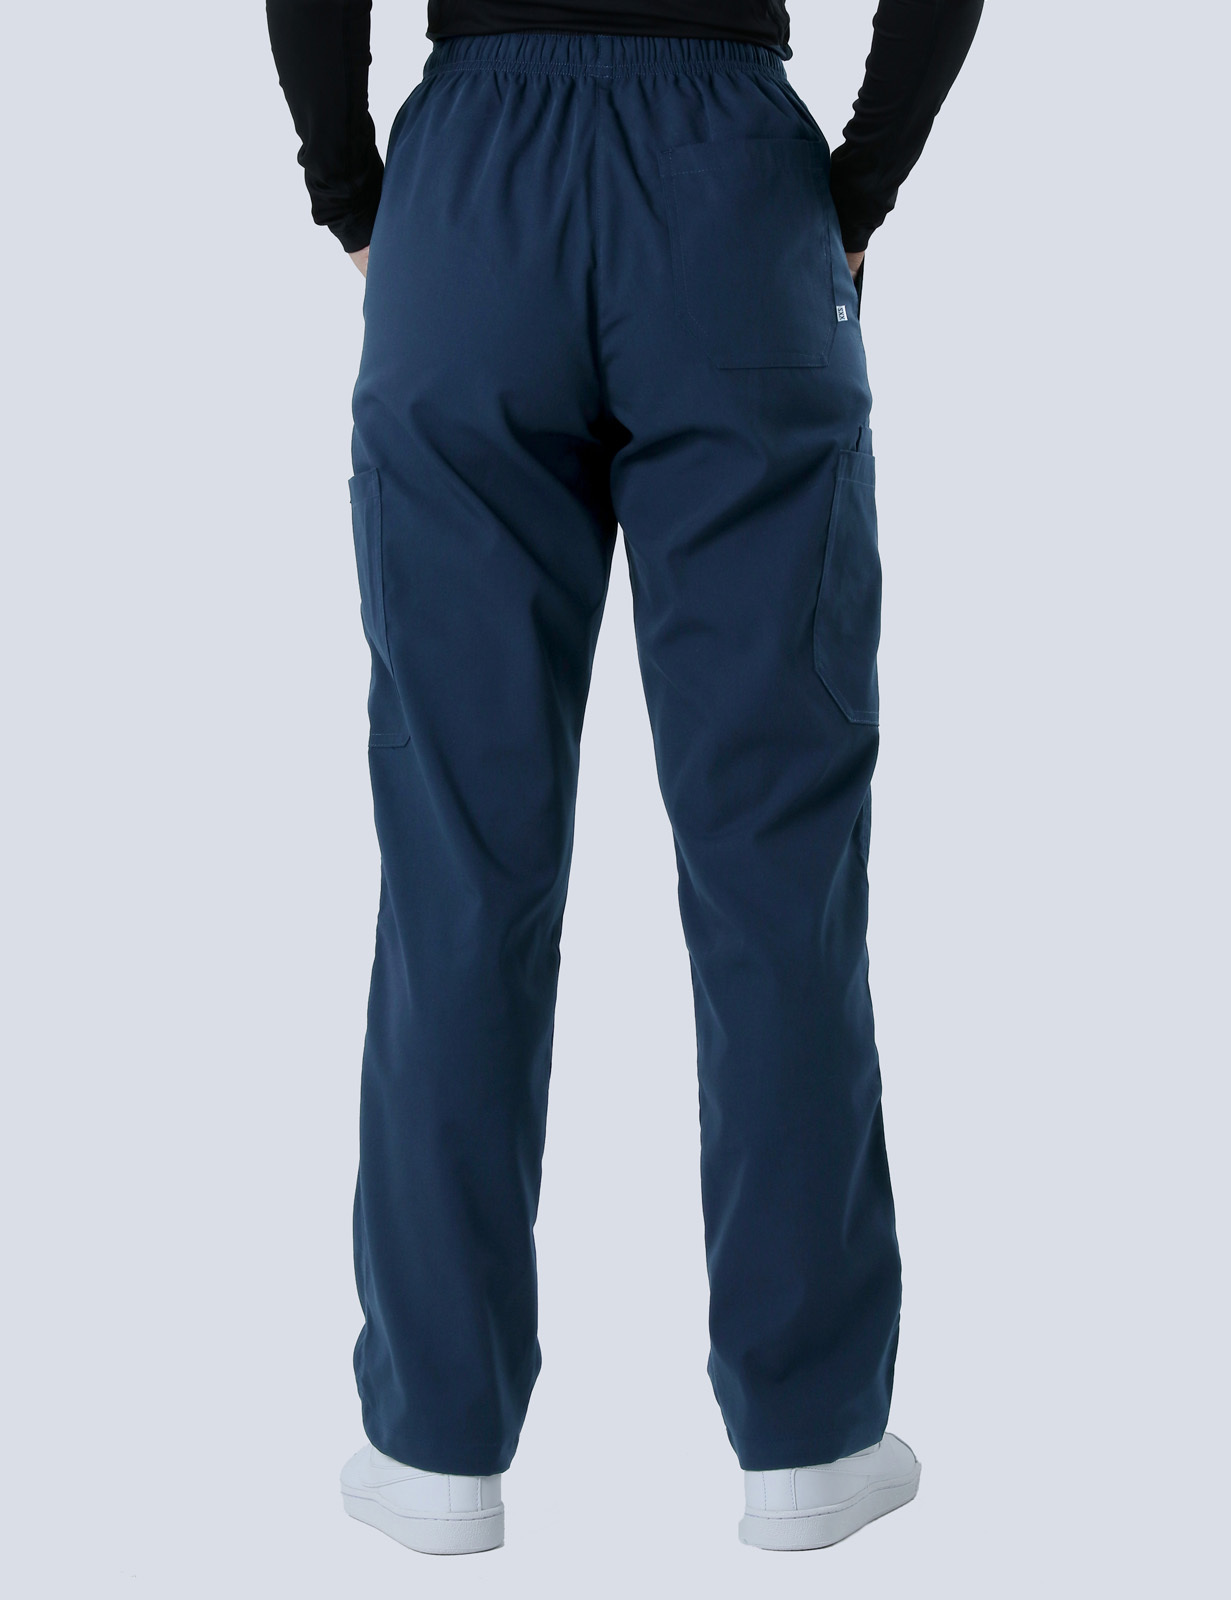 Women's Cargo Performance Pants - Navy - 2X Large - 3